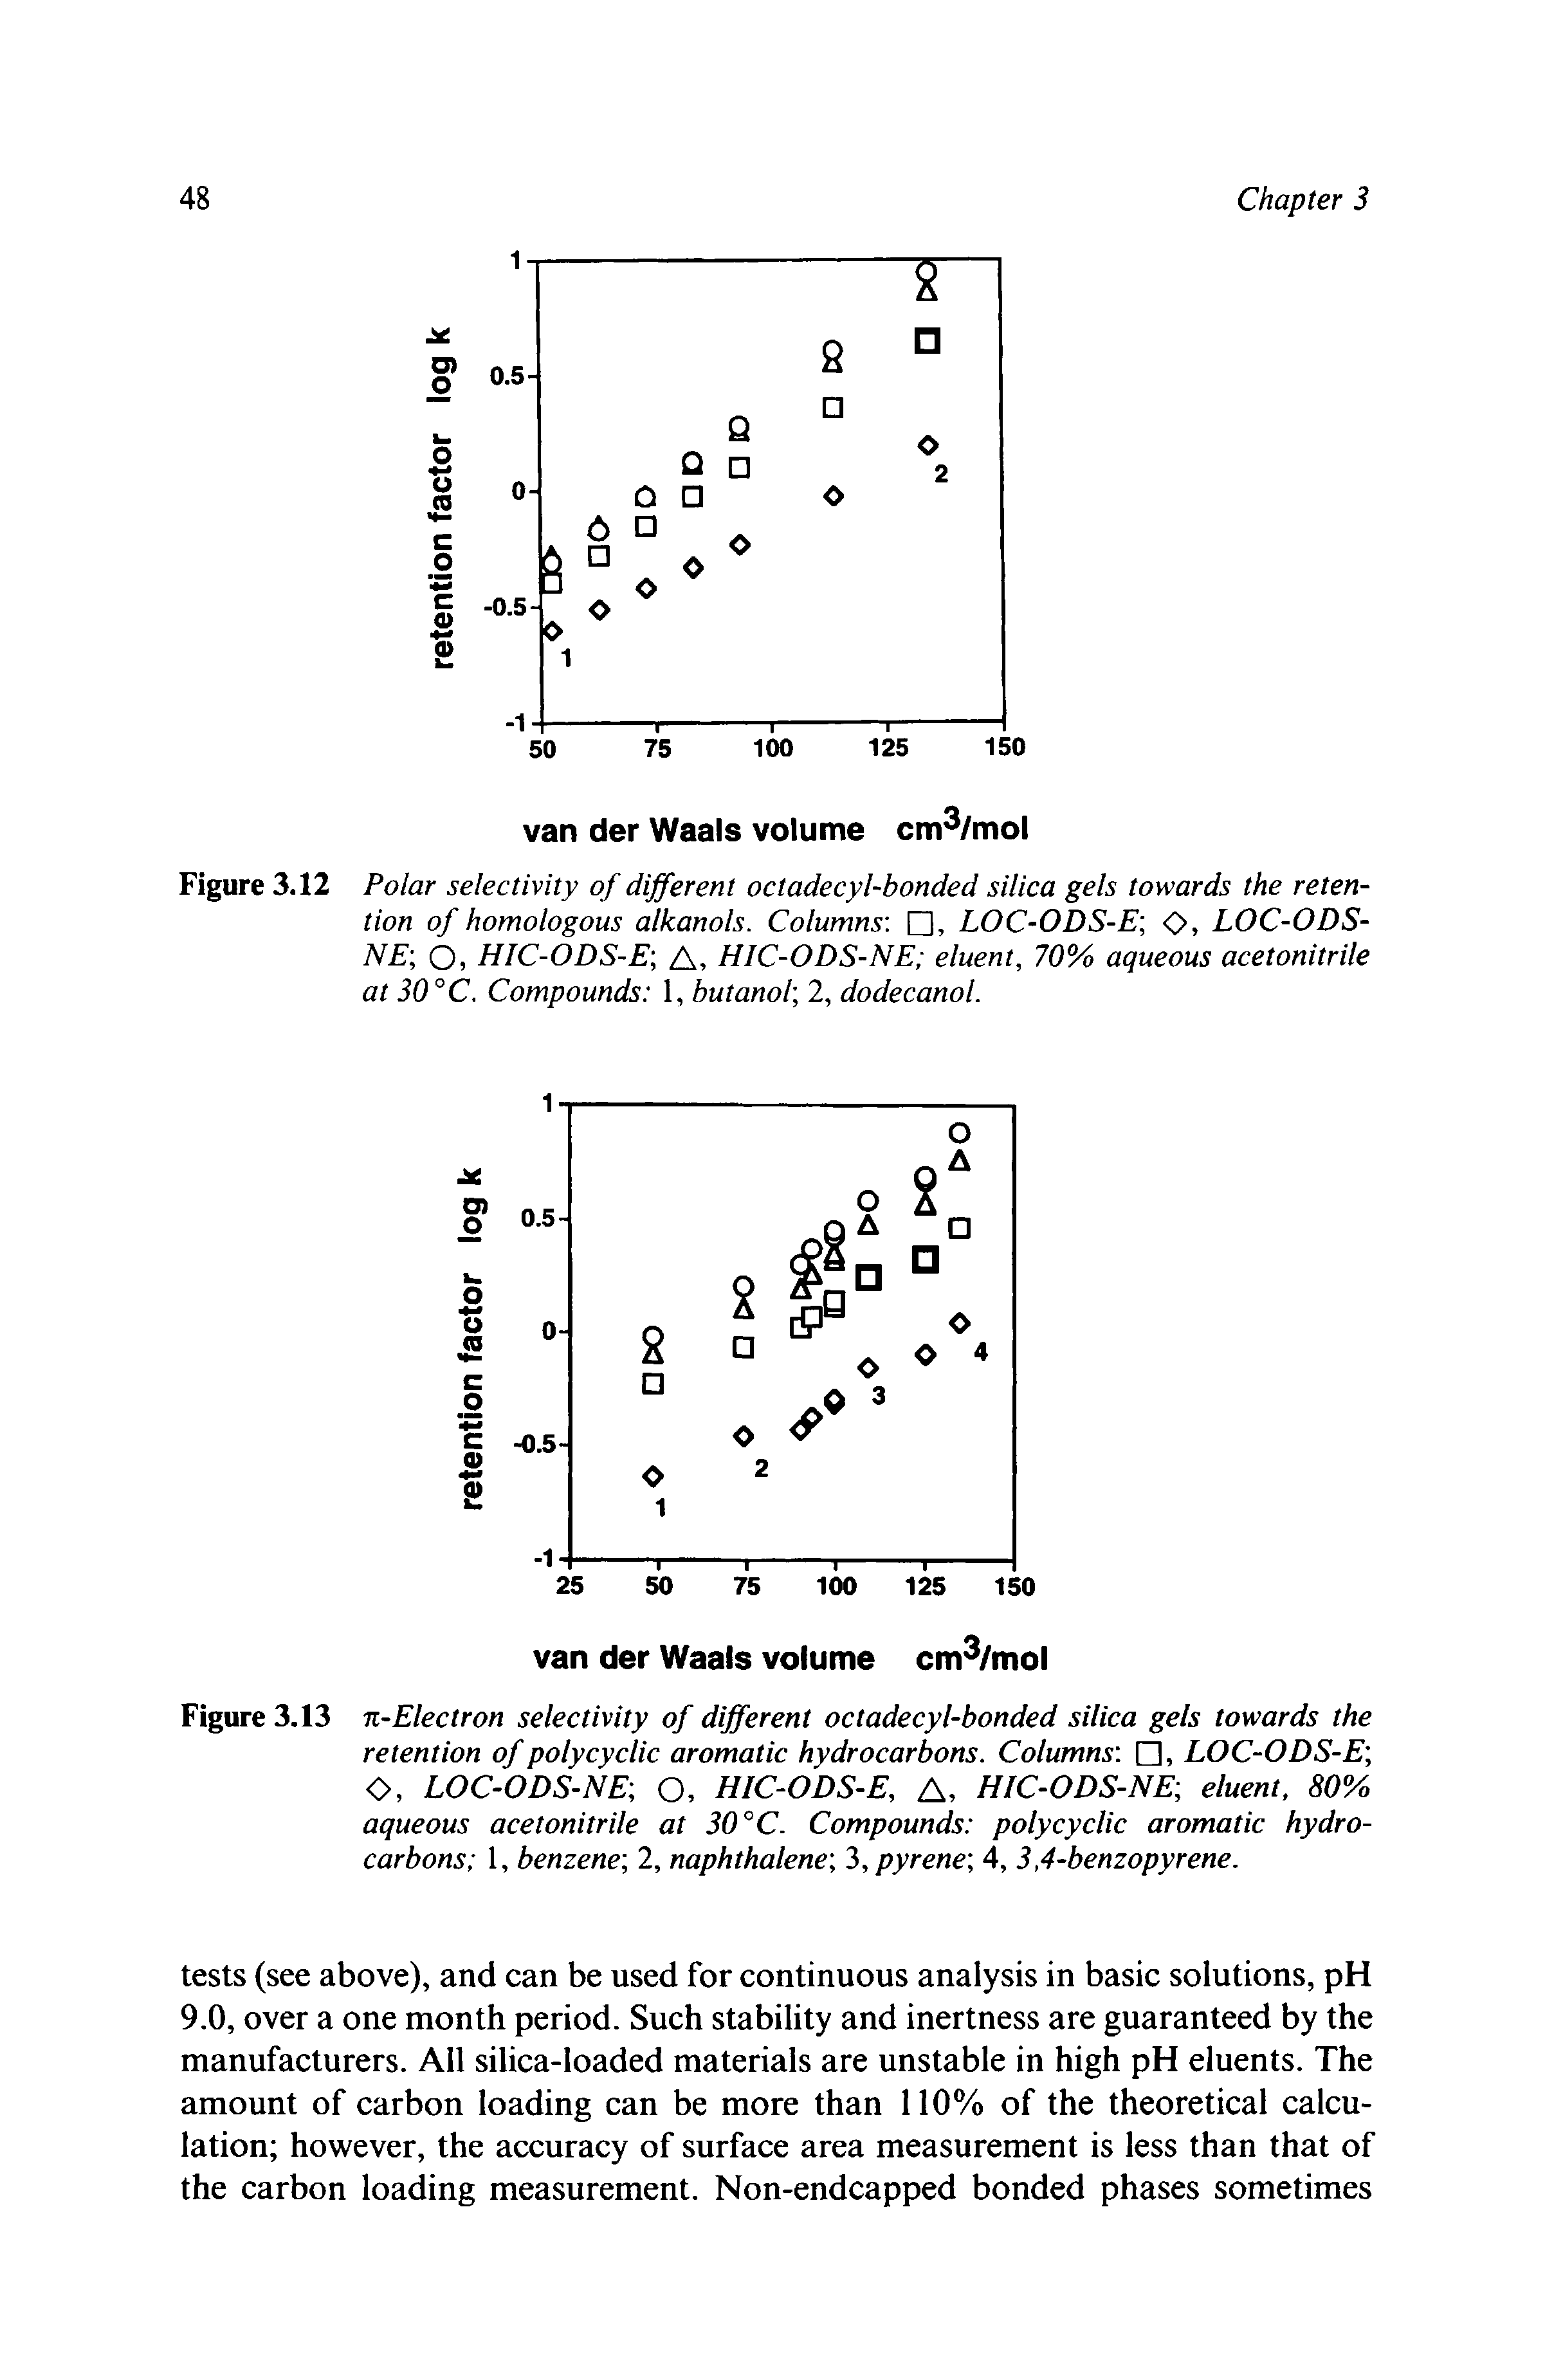 Figure 3.12 Polar selectivity of different octadecyl-bonded silica gels towards the retention of homologous alkanols. Columns , LOC-ODS-E O, LOC-ODS-NE O) HIC-ODS-E A, HIC-ODS-NE eluent, 70% aqueous acetonitrile at 30°C. Compounds 1, butanol, 2, dodecanol.